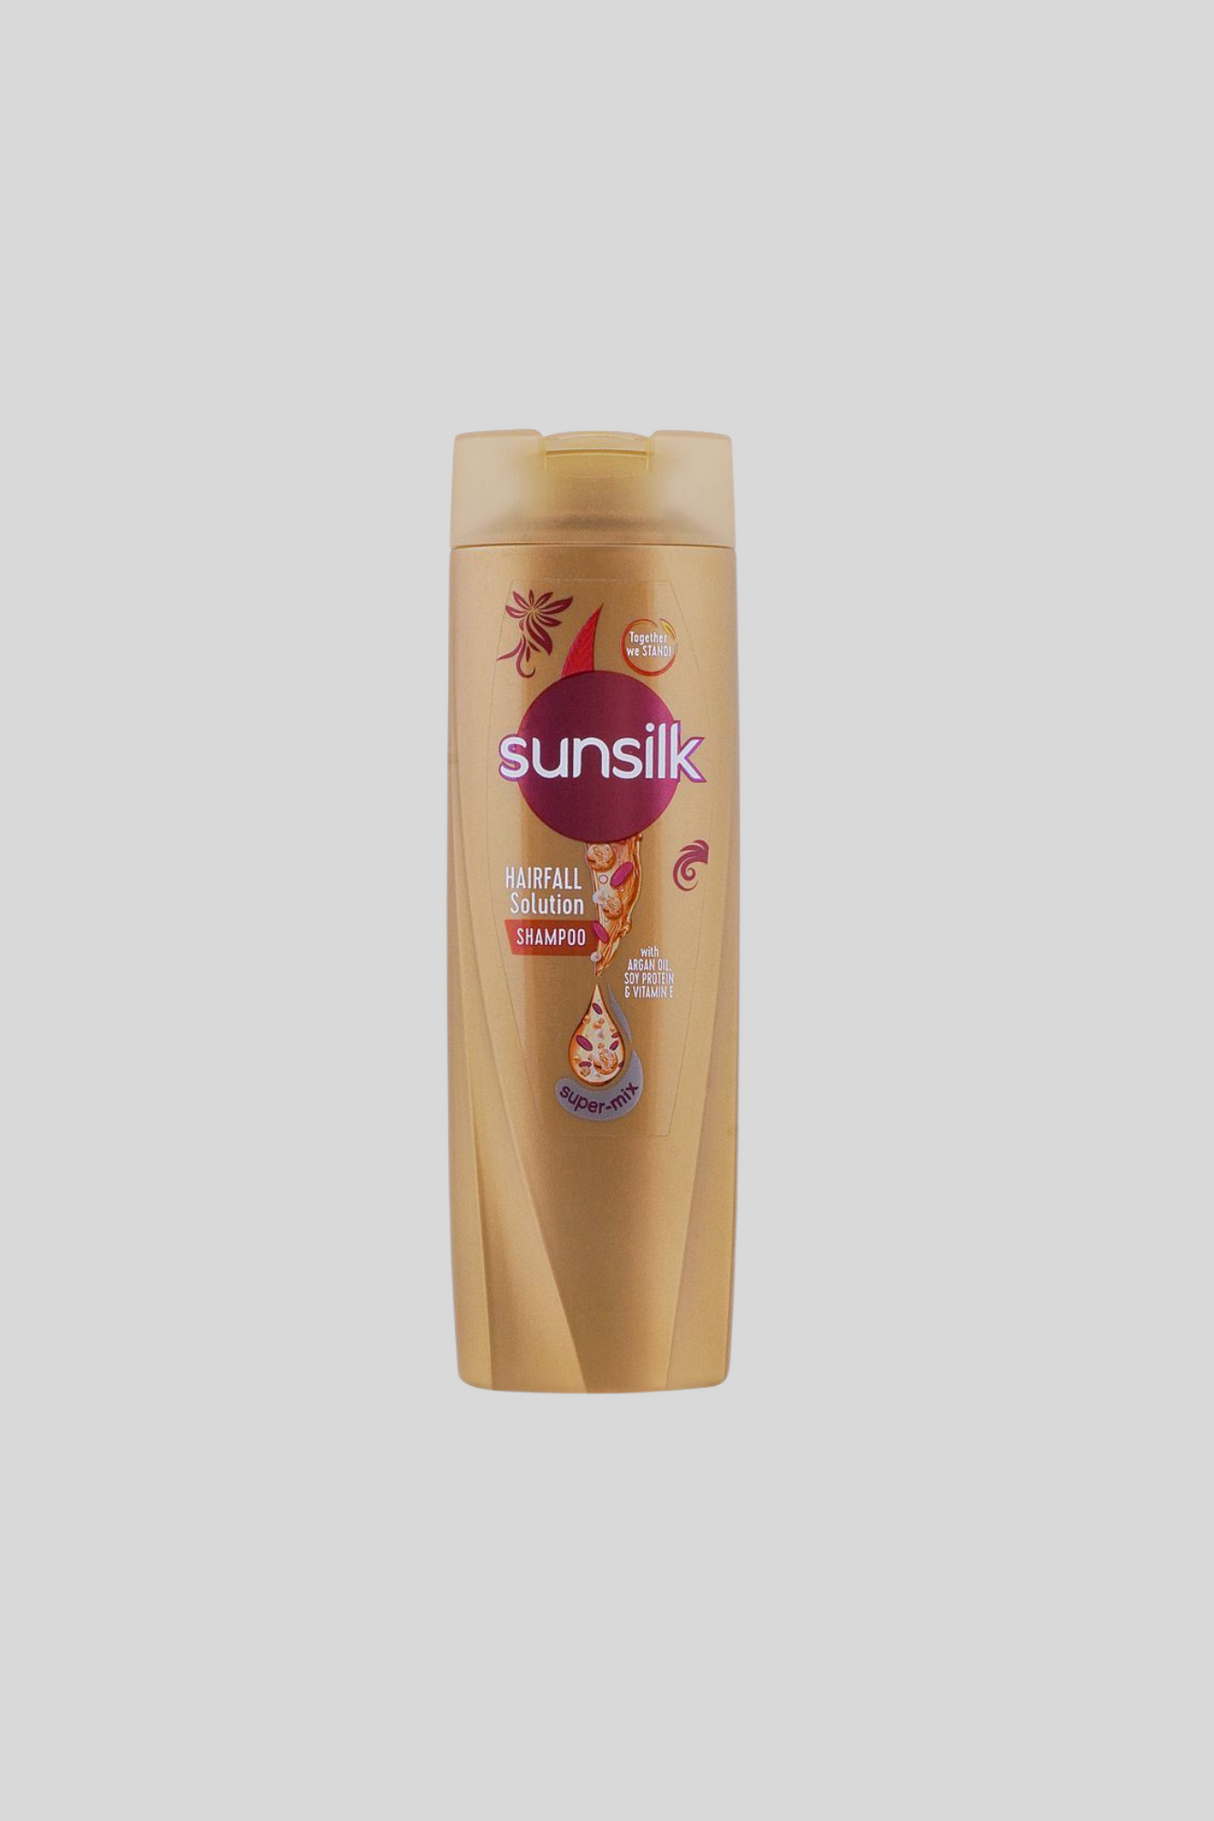 sunsilk shampoo hair fall solution 185ml